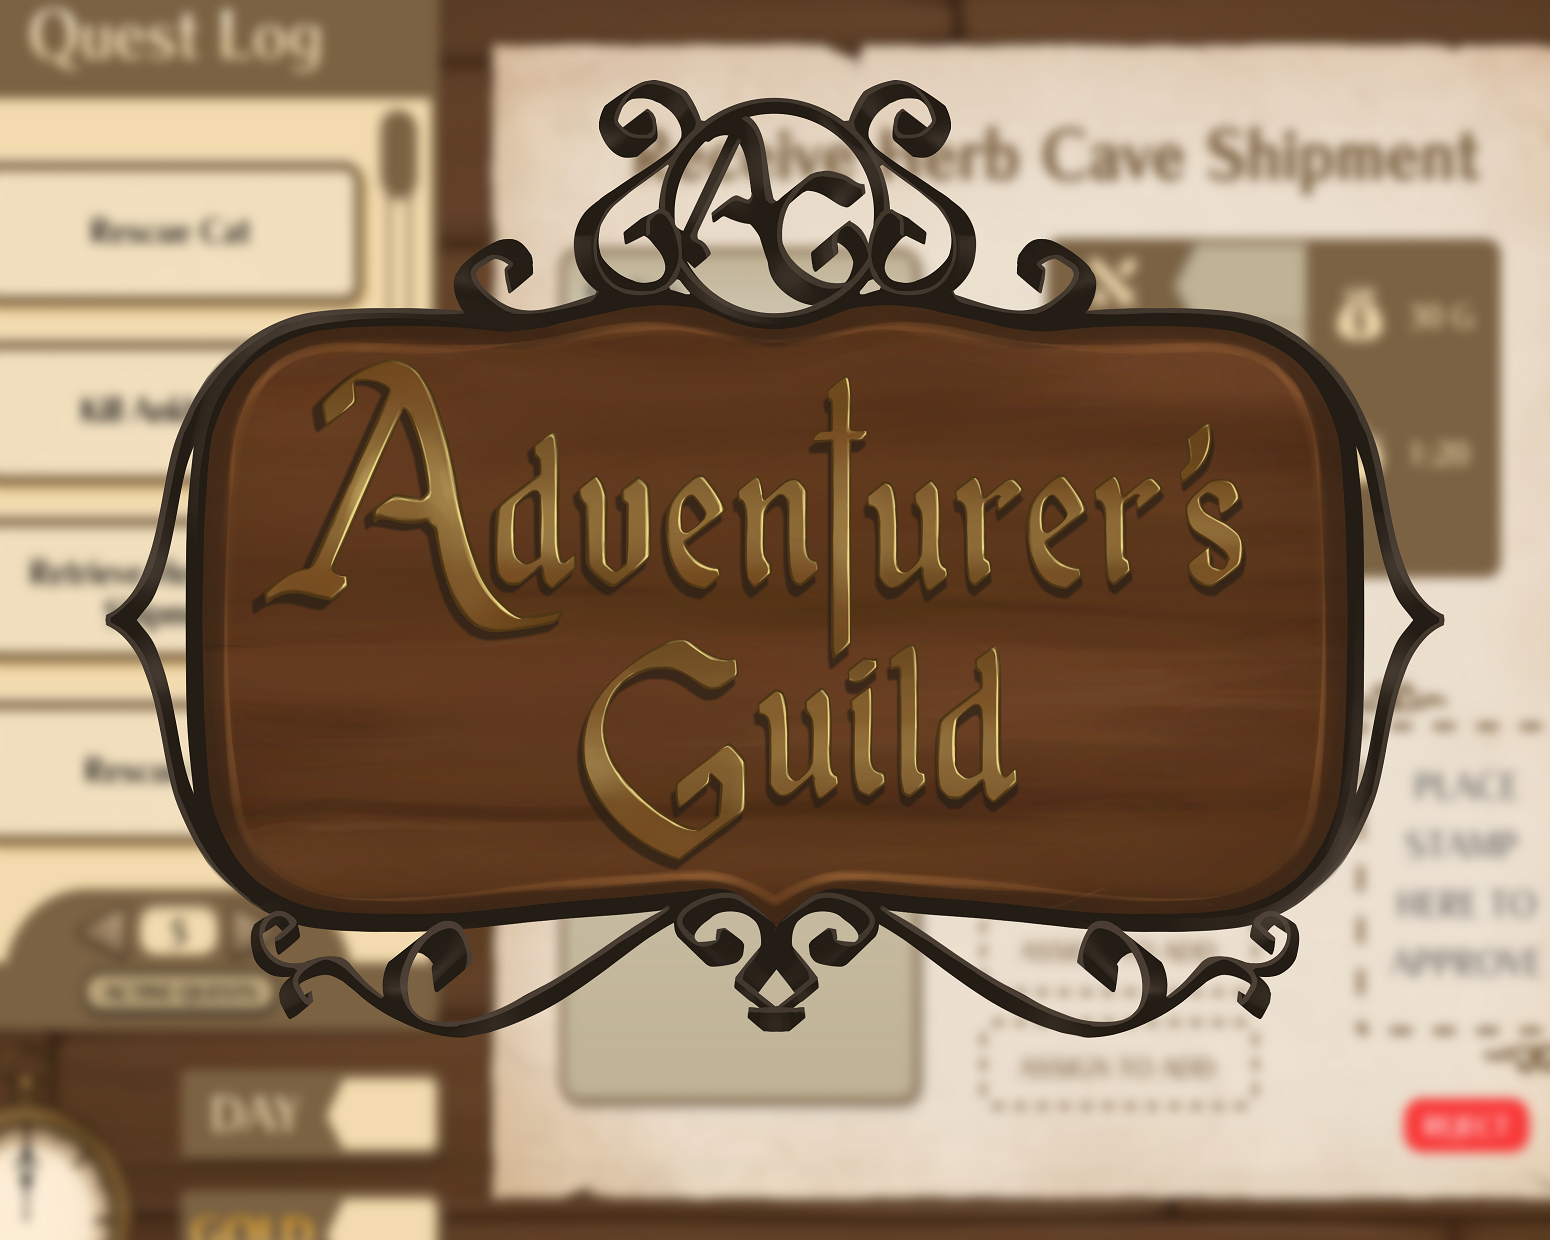 The Adventurer's Guild